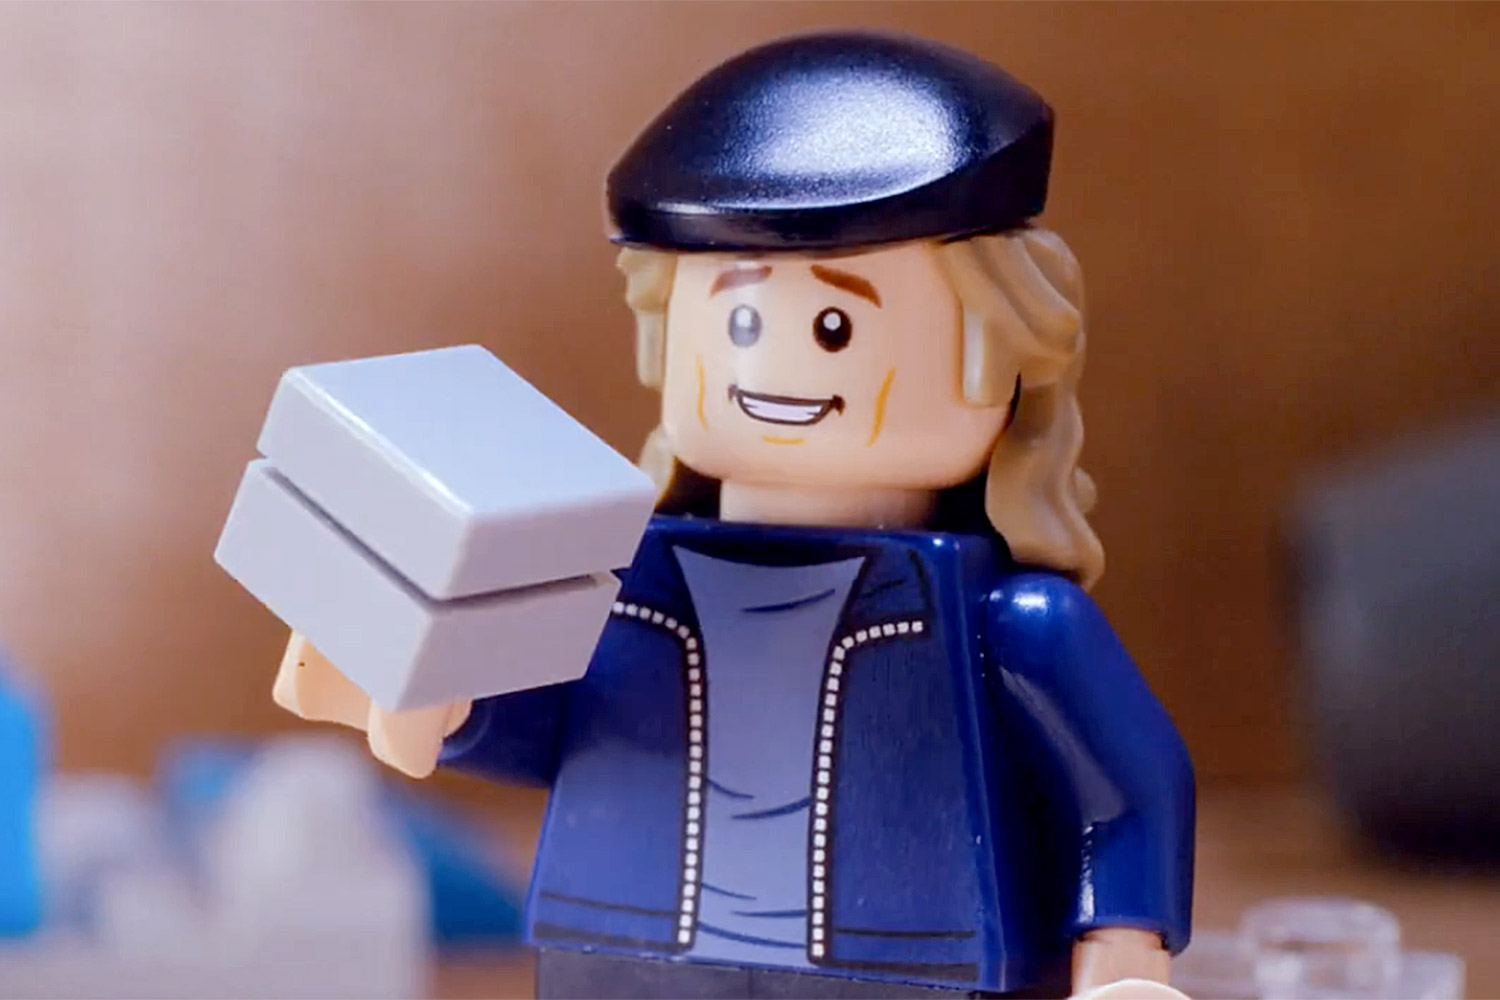 exclusive season 3 trailer for Lego Masters